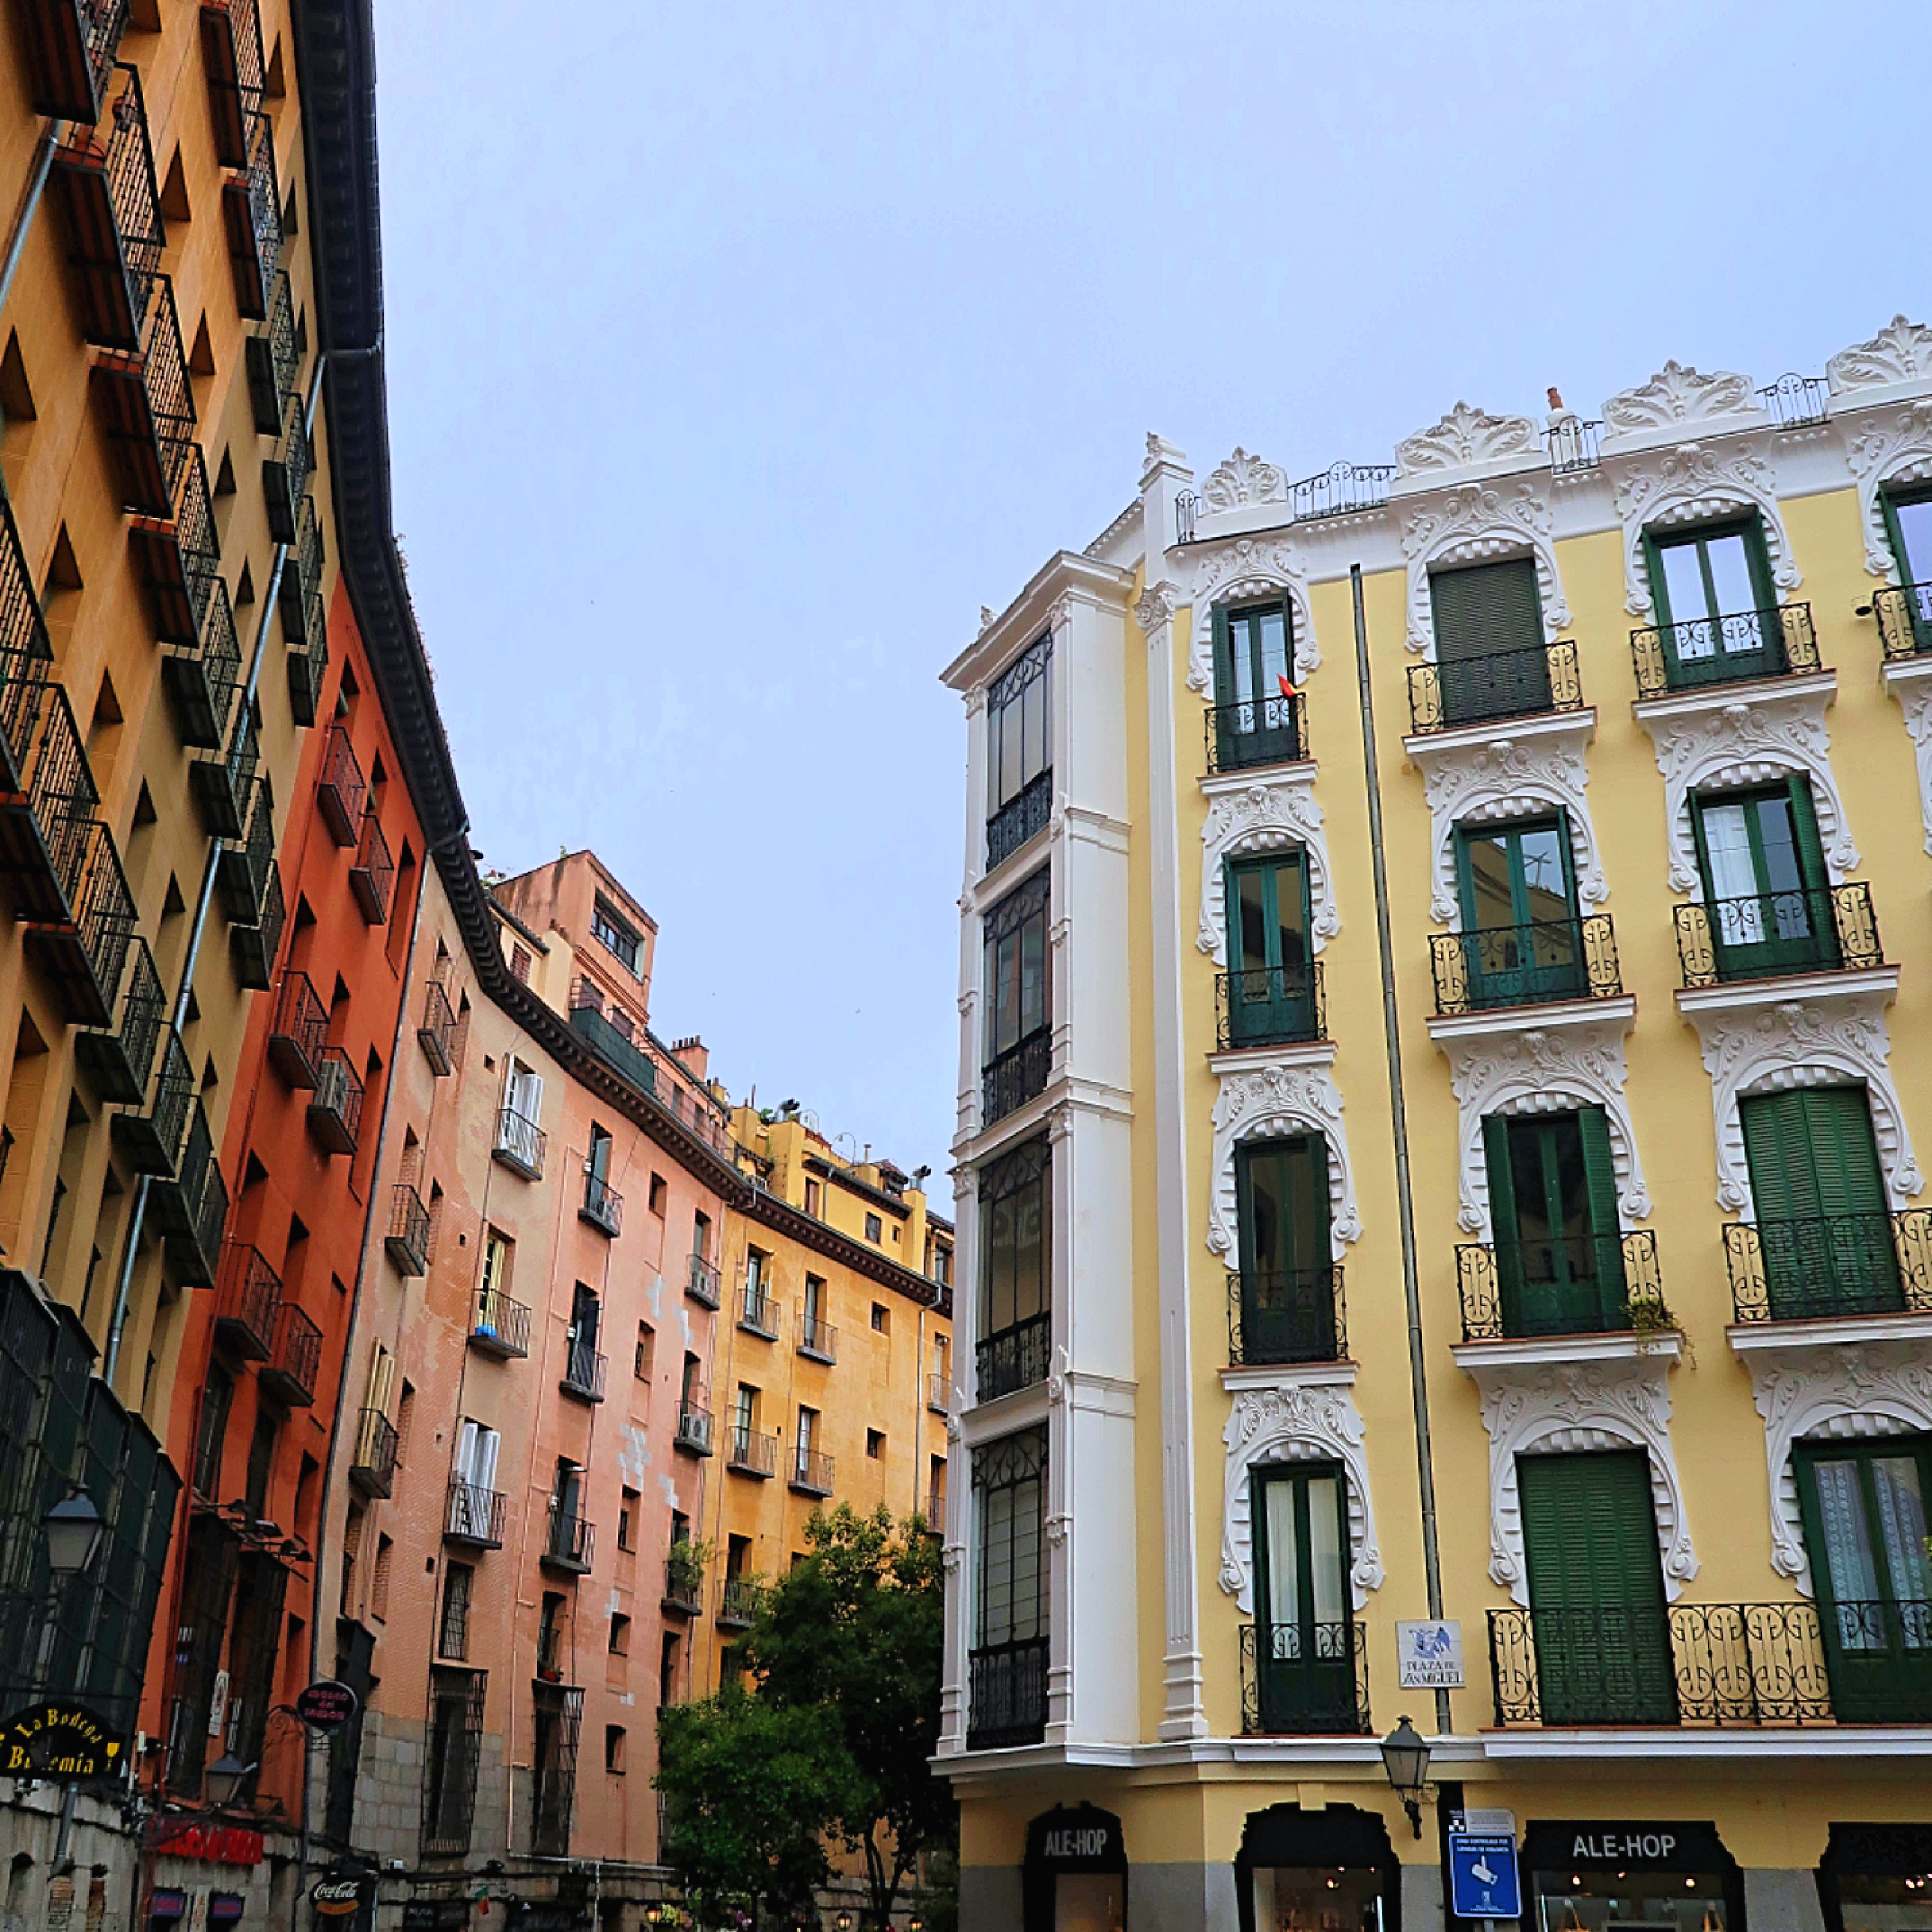 Colourful Spanish architecture. 